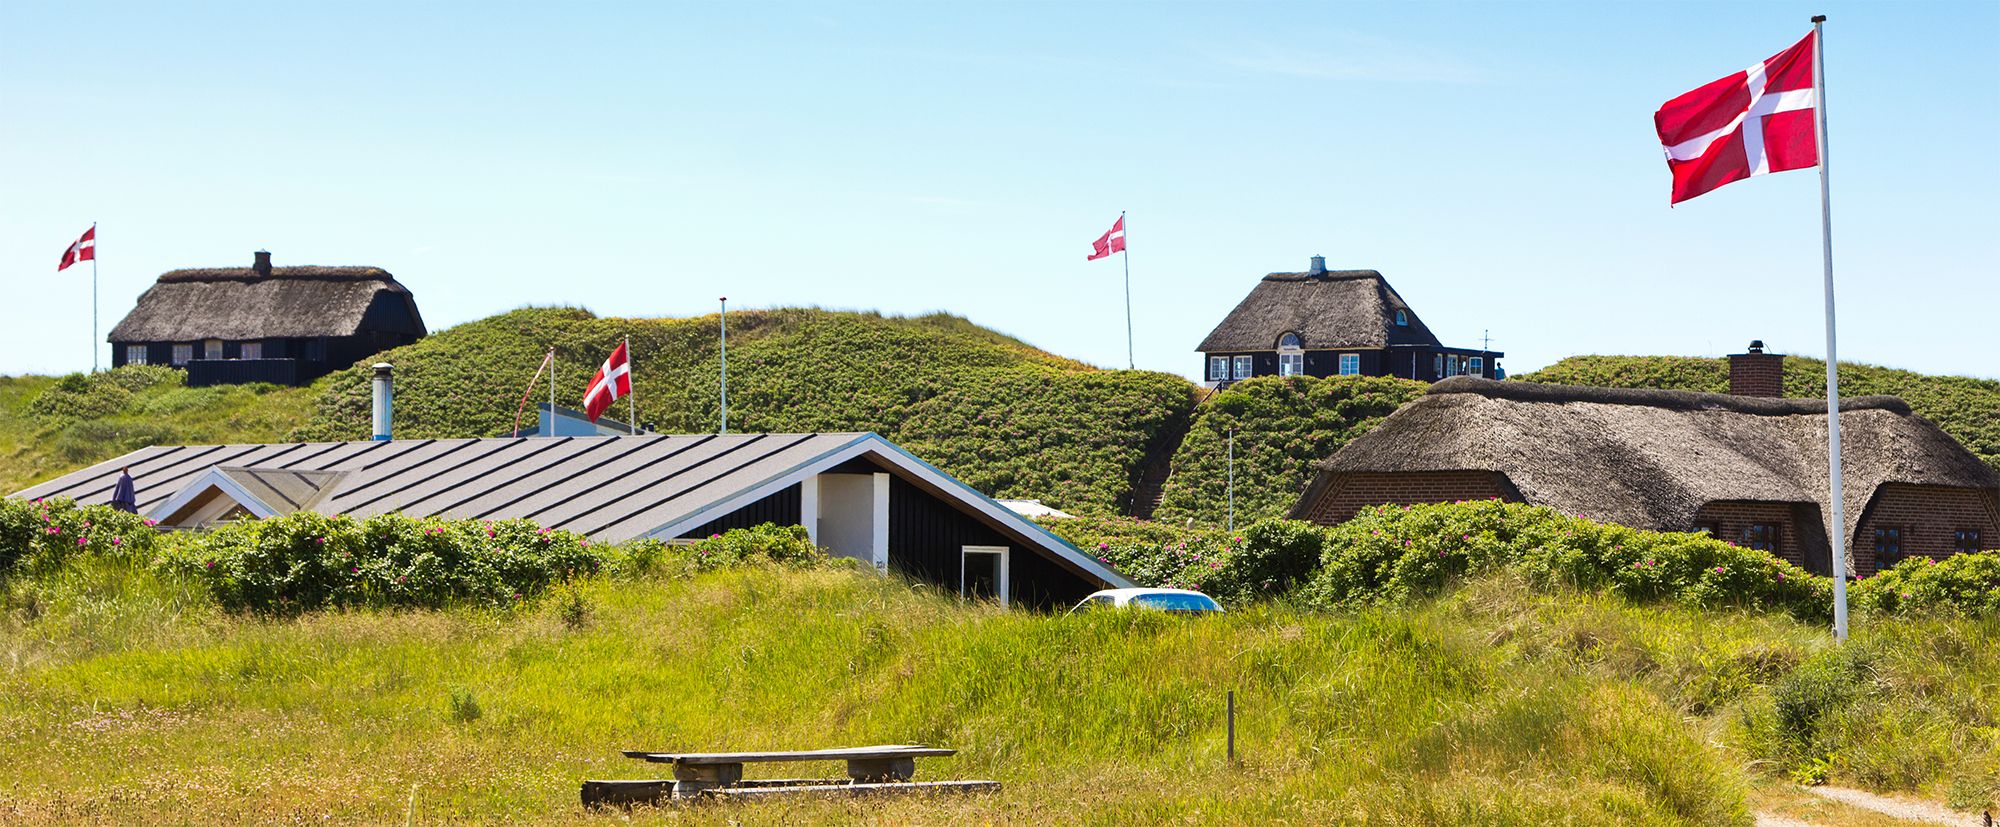 Danish summerhouses